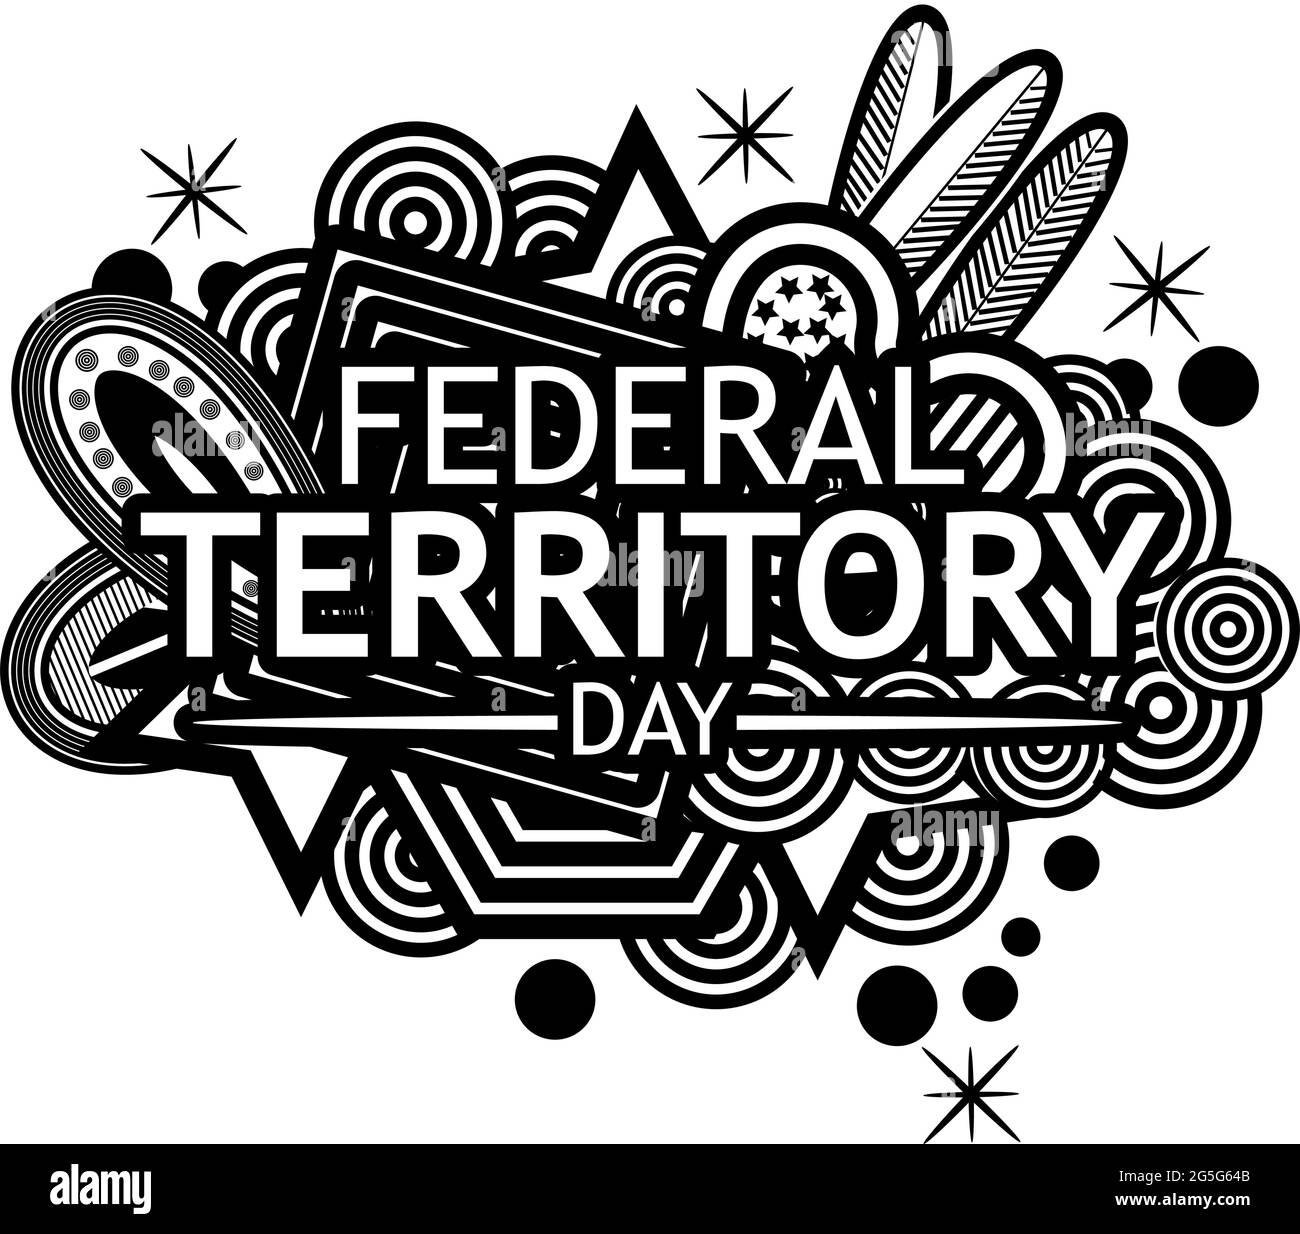 Territory holiday federal Federal statutory